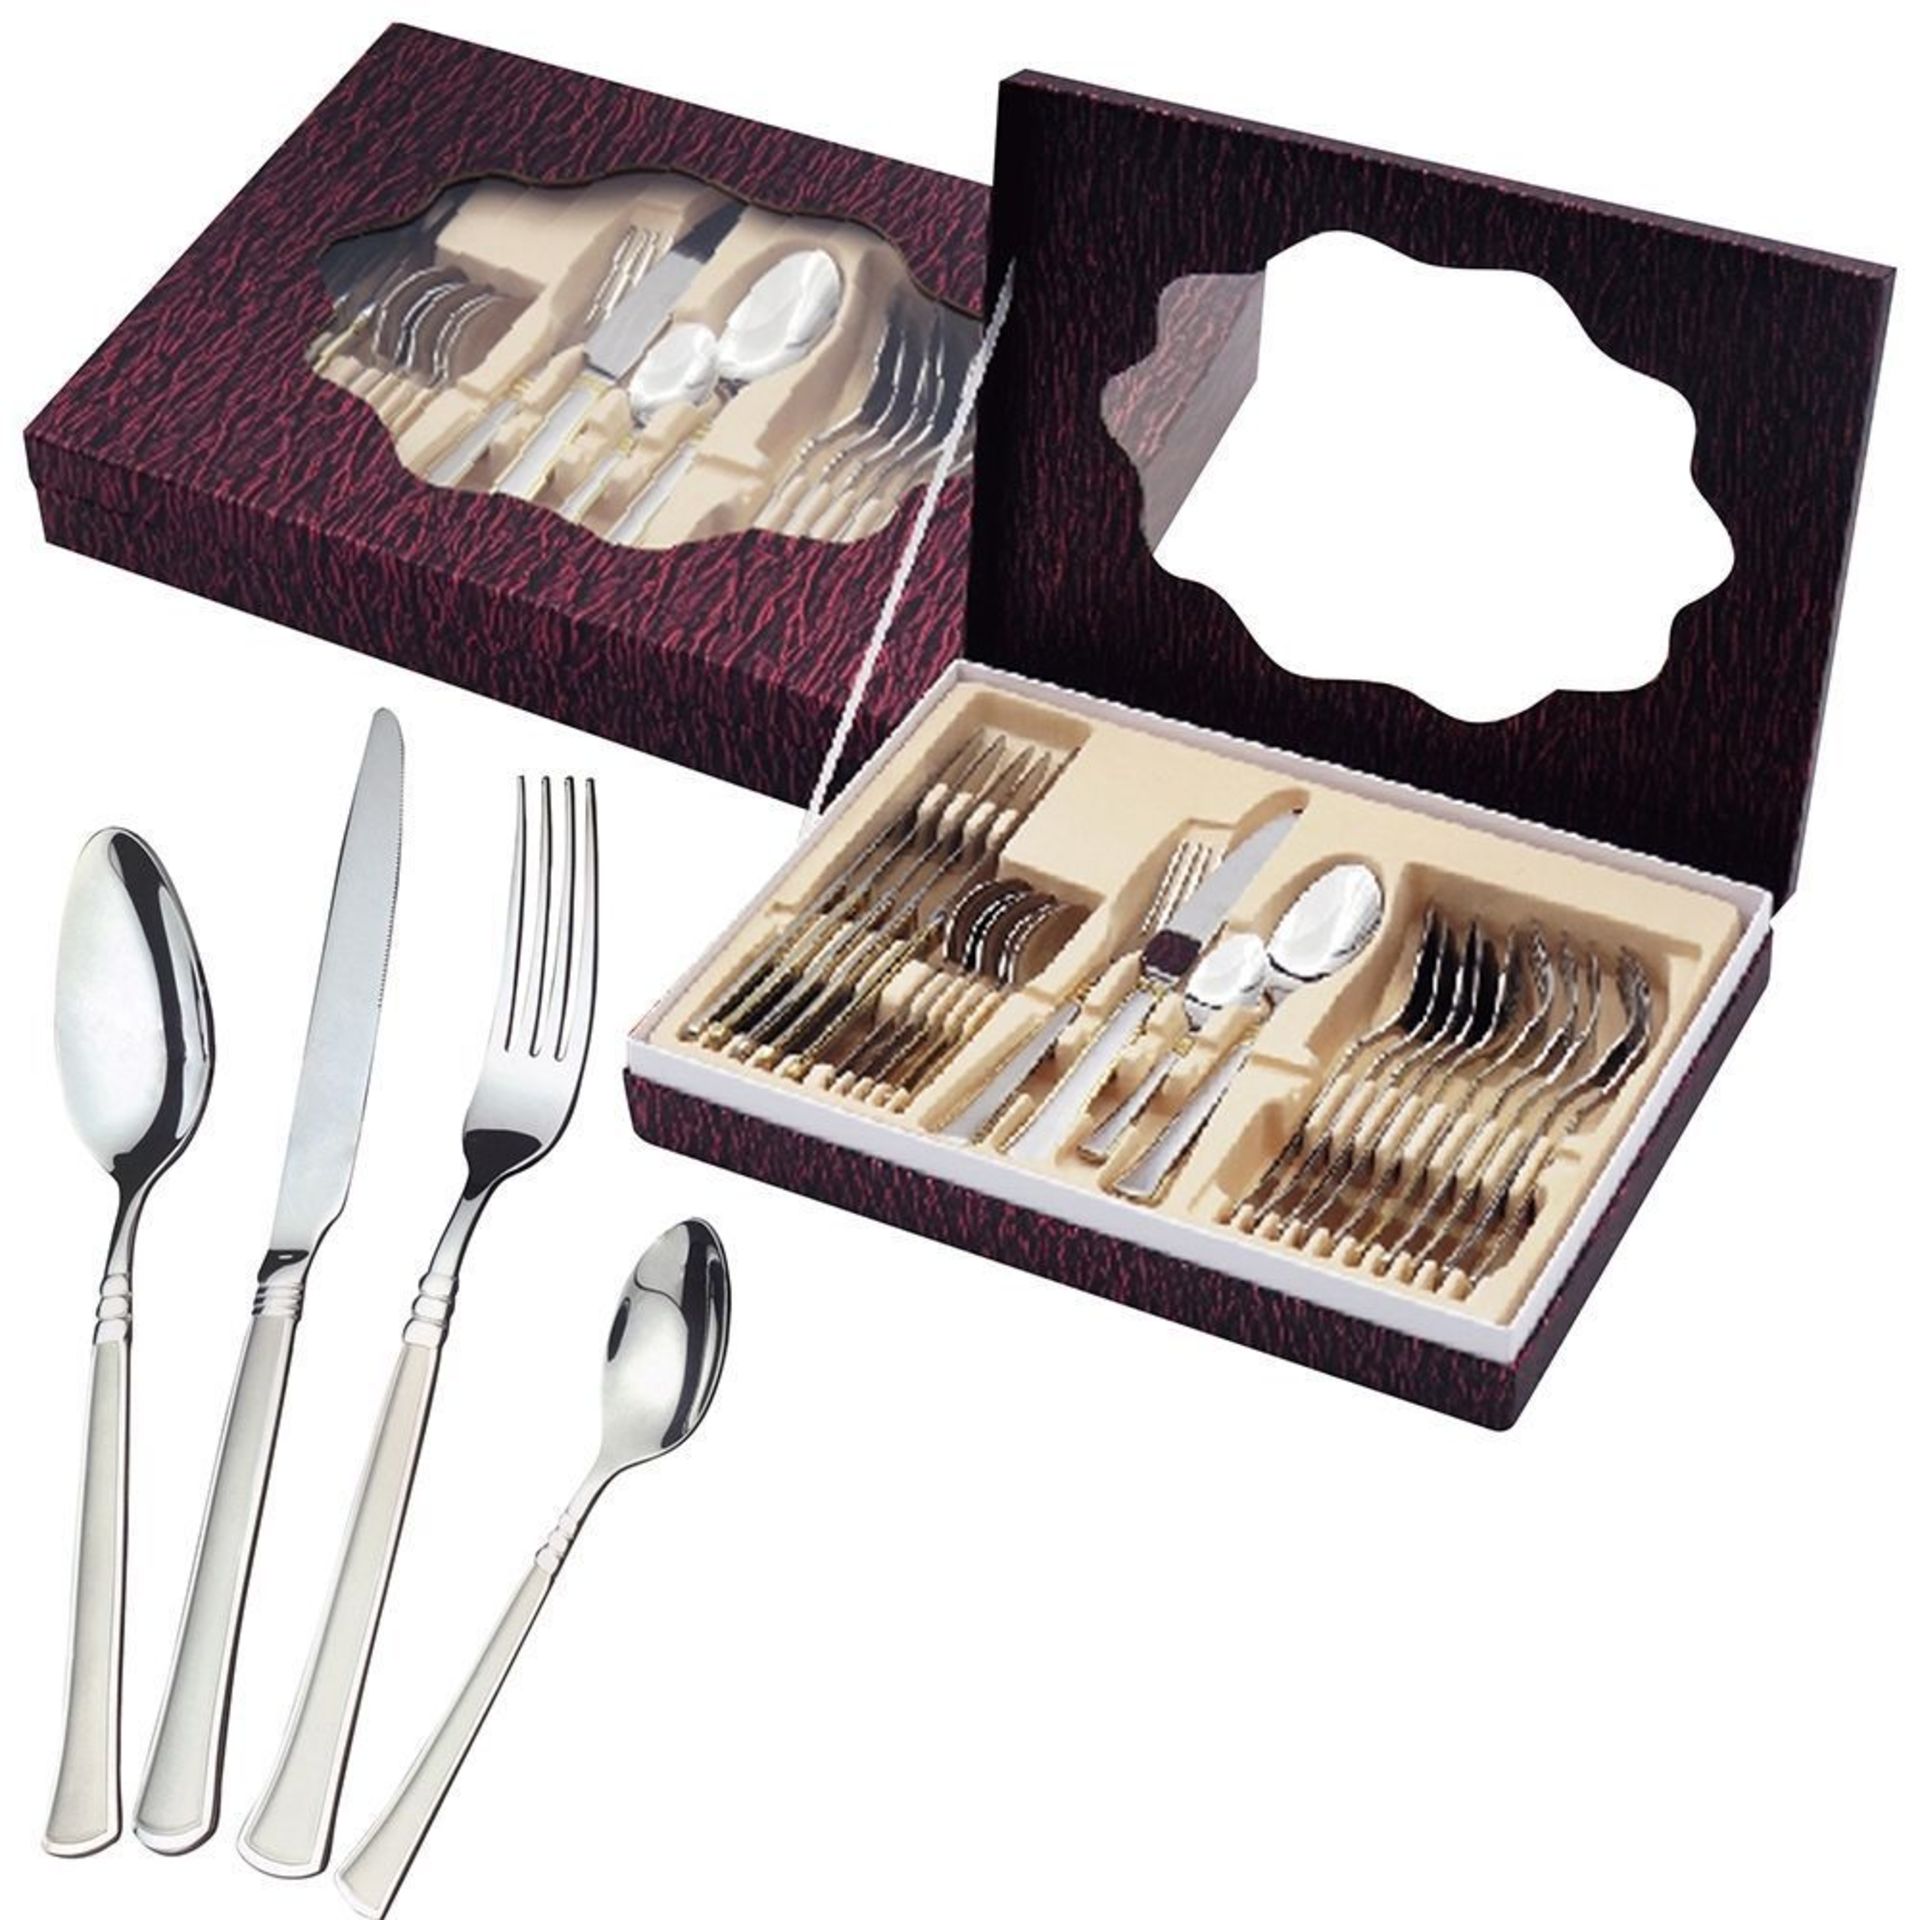 V Brand New Waltmann And Sons Twenty Four Piece Stainless Steel Cutlery Set In Presentation Box